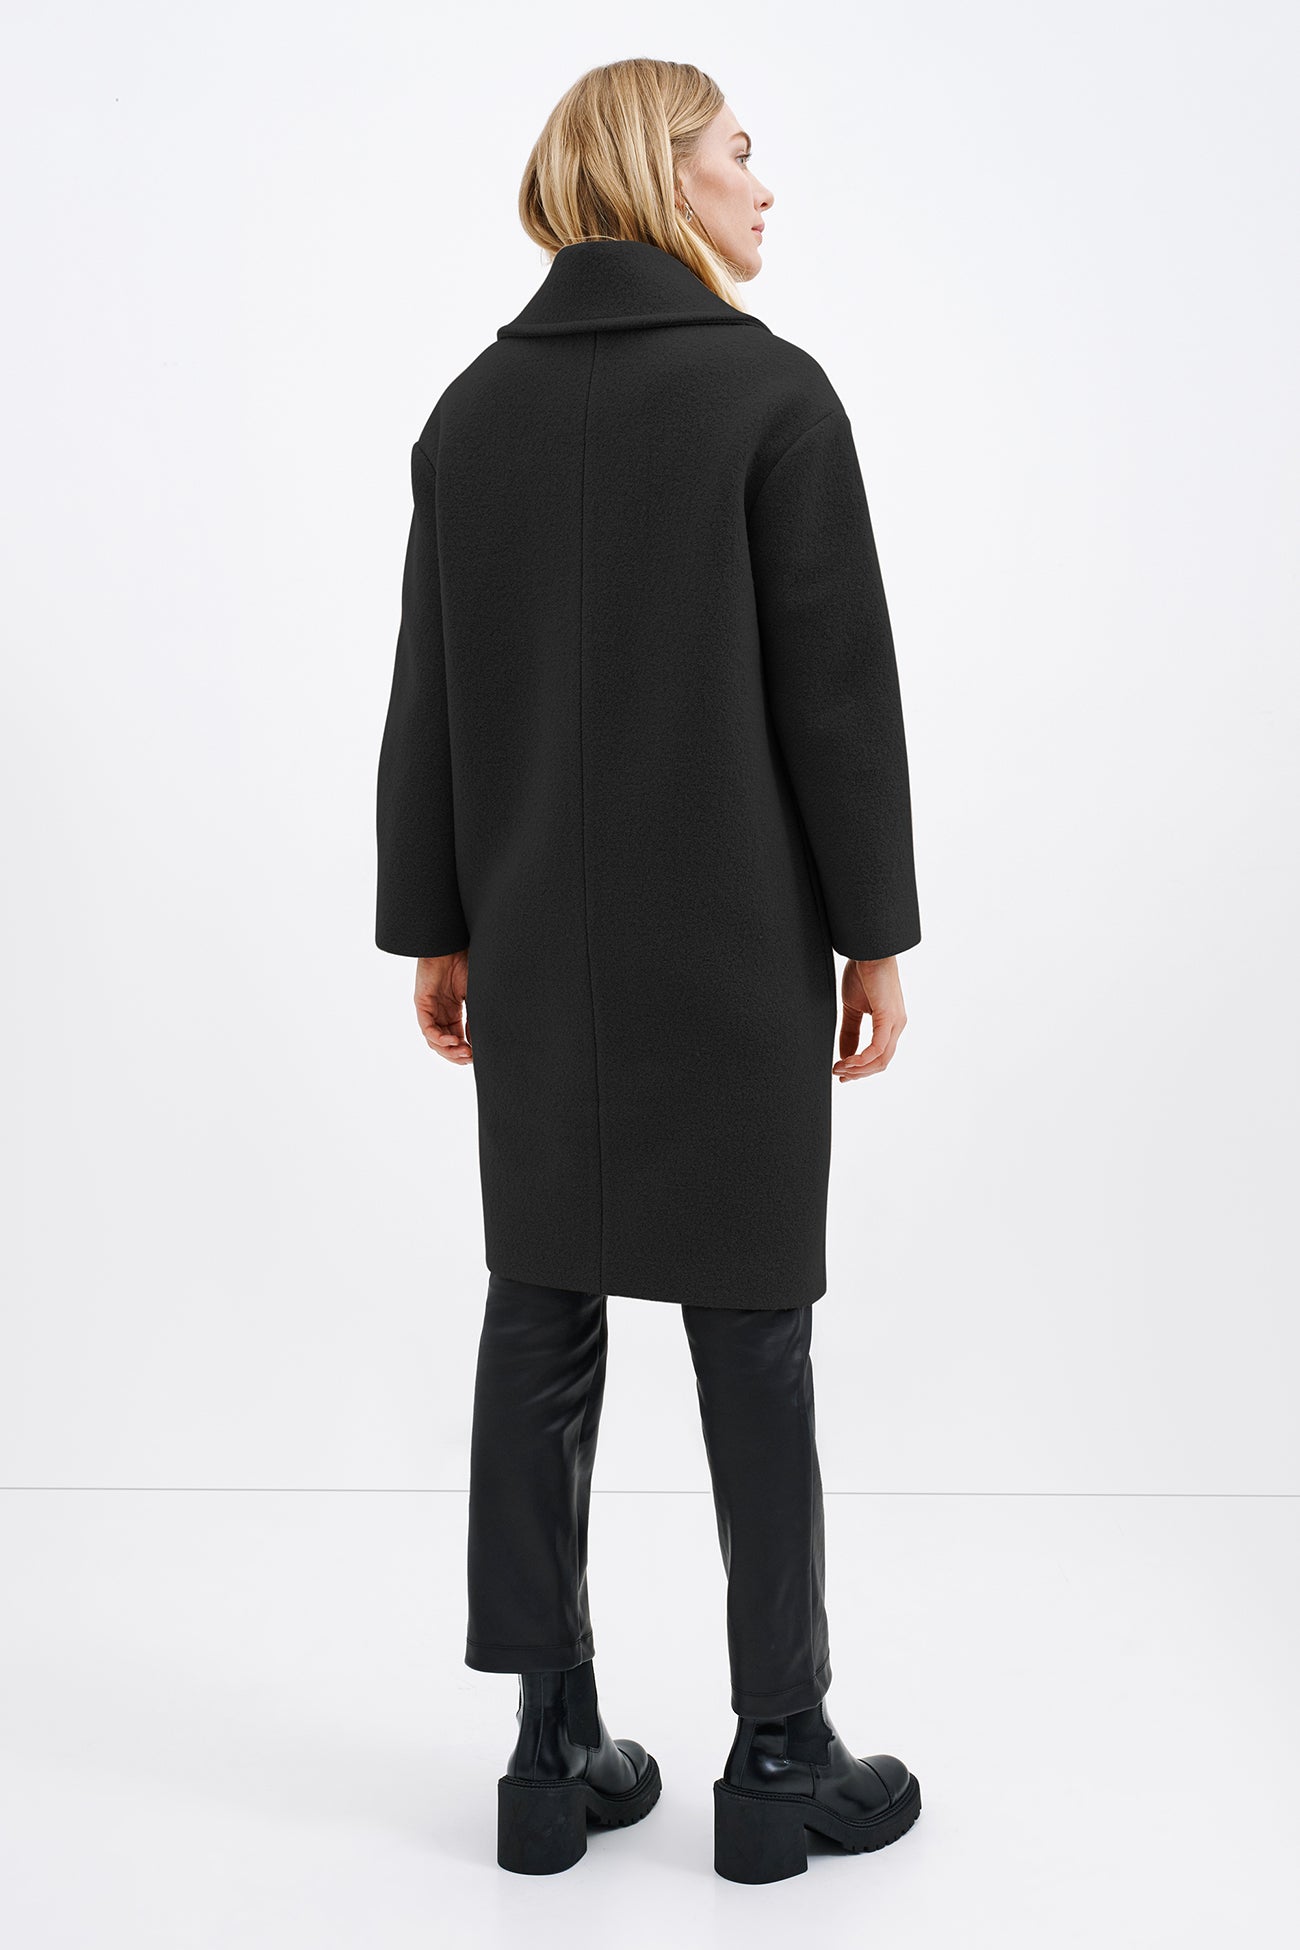 Black Overcoat Wool Jacket - Owen Coat | Marcella